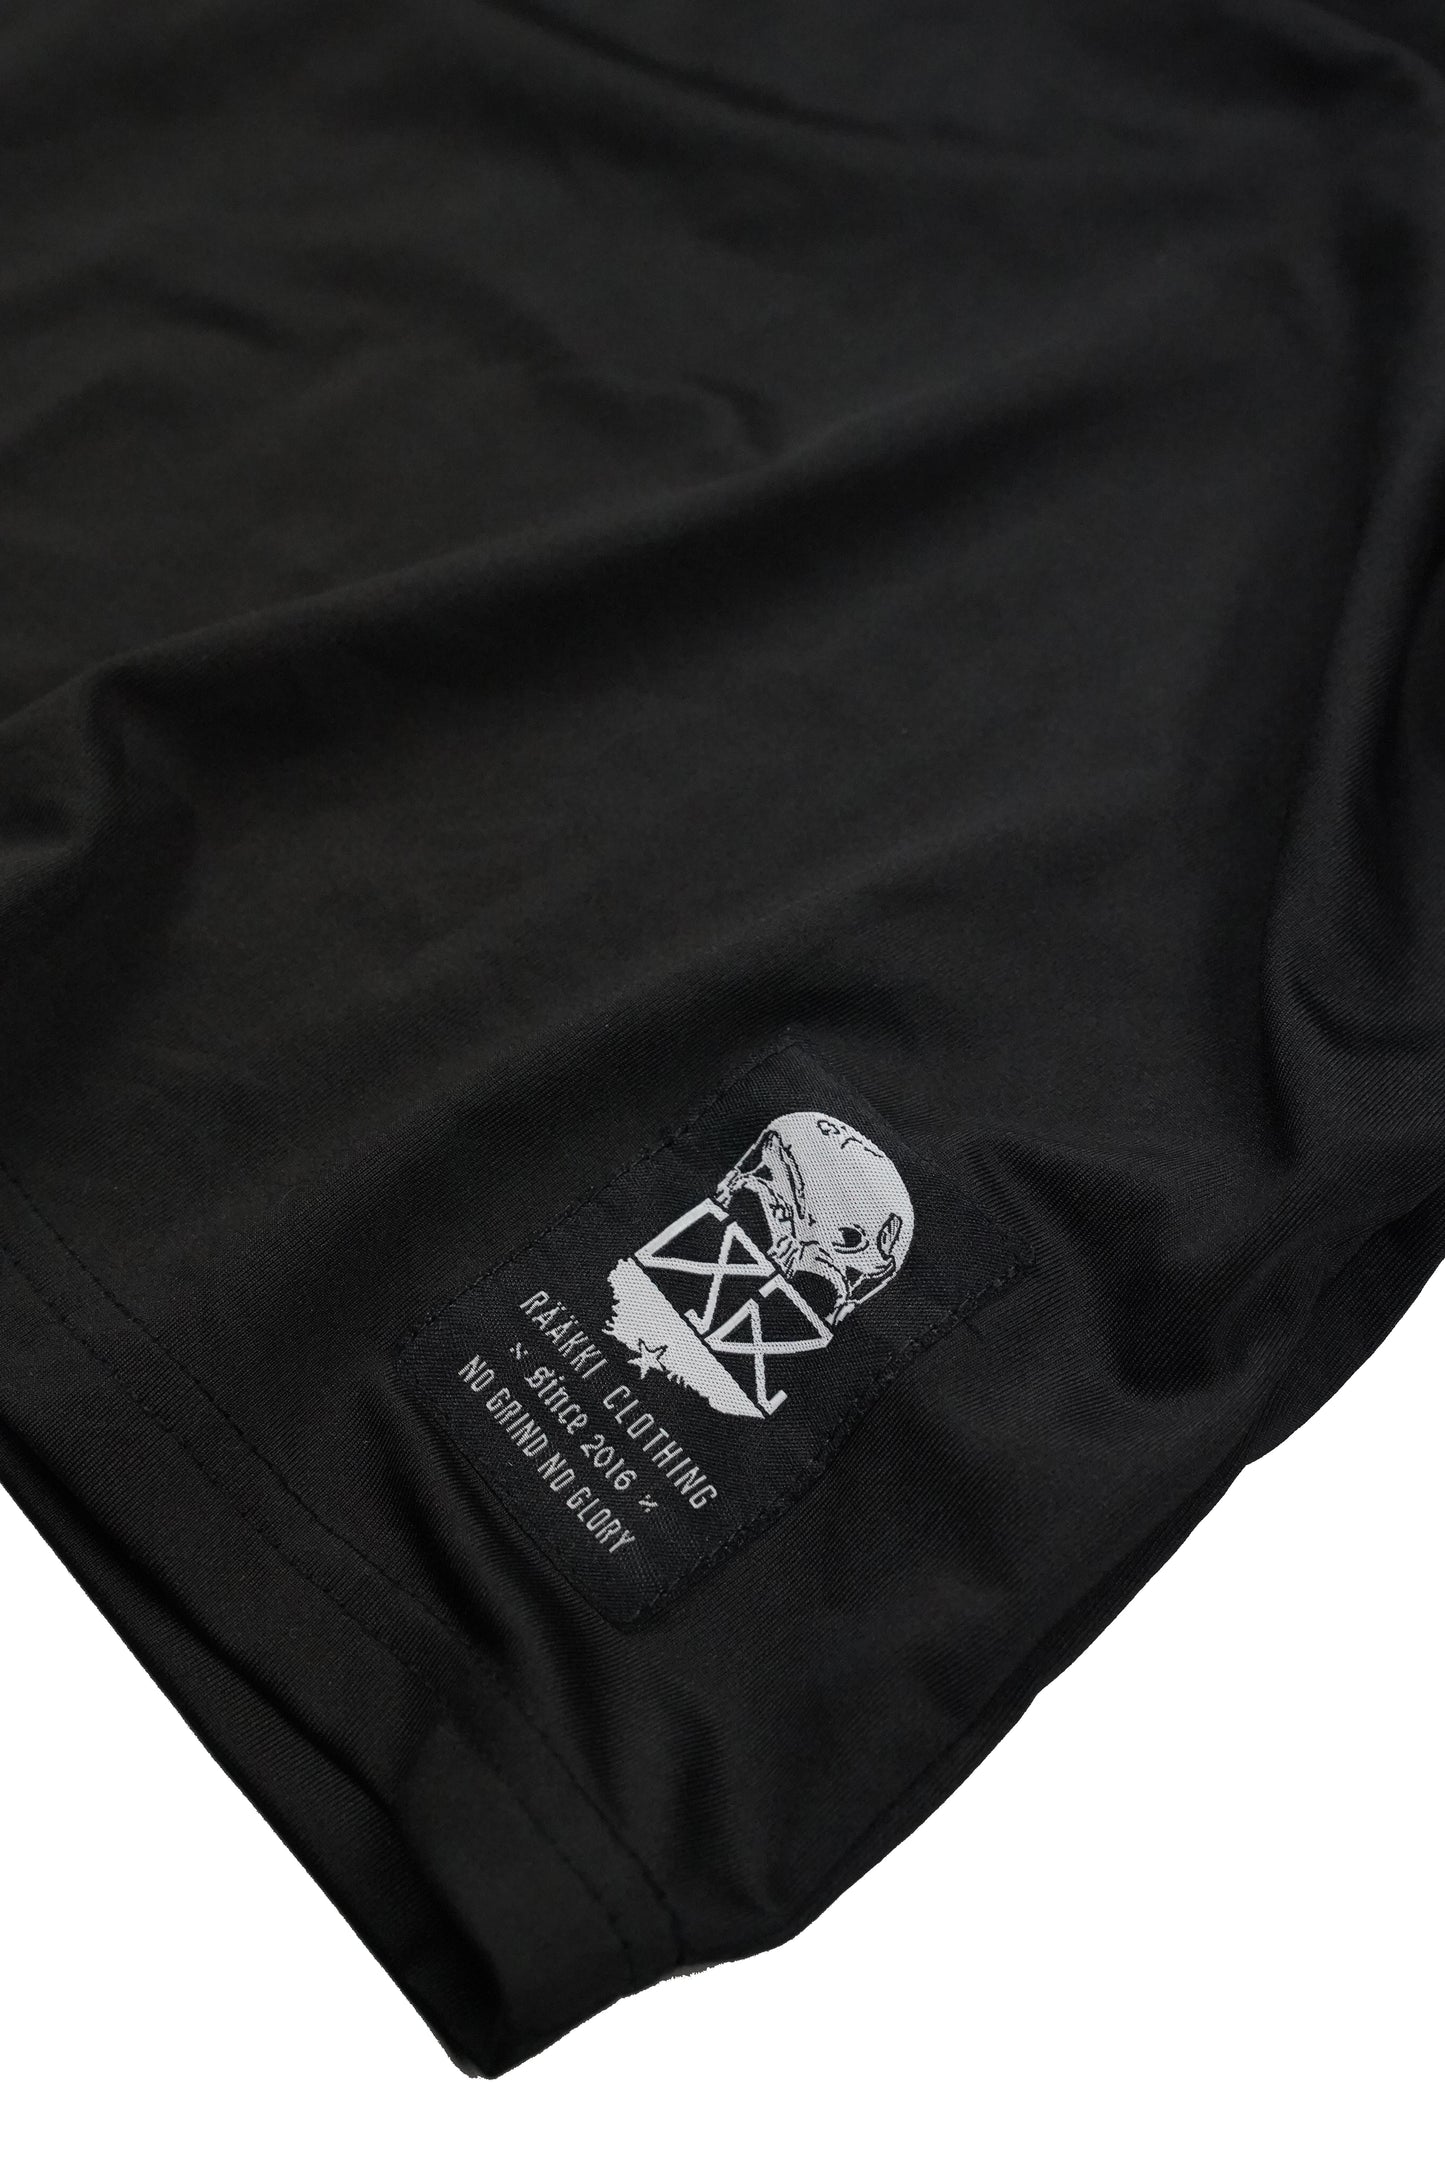 ALWS Tech T-shirt - Black (no logo)